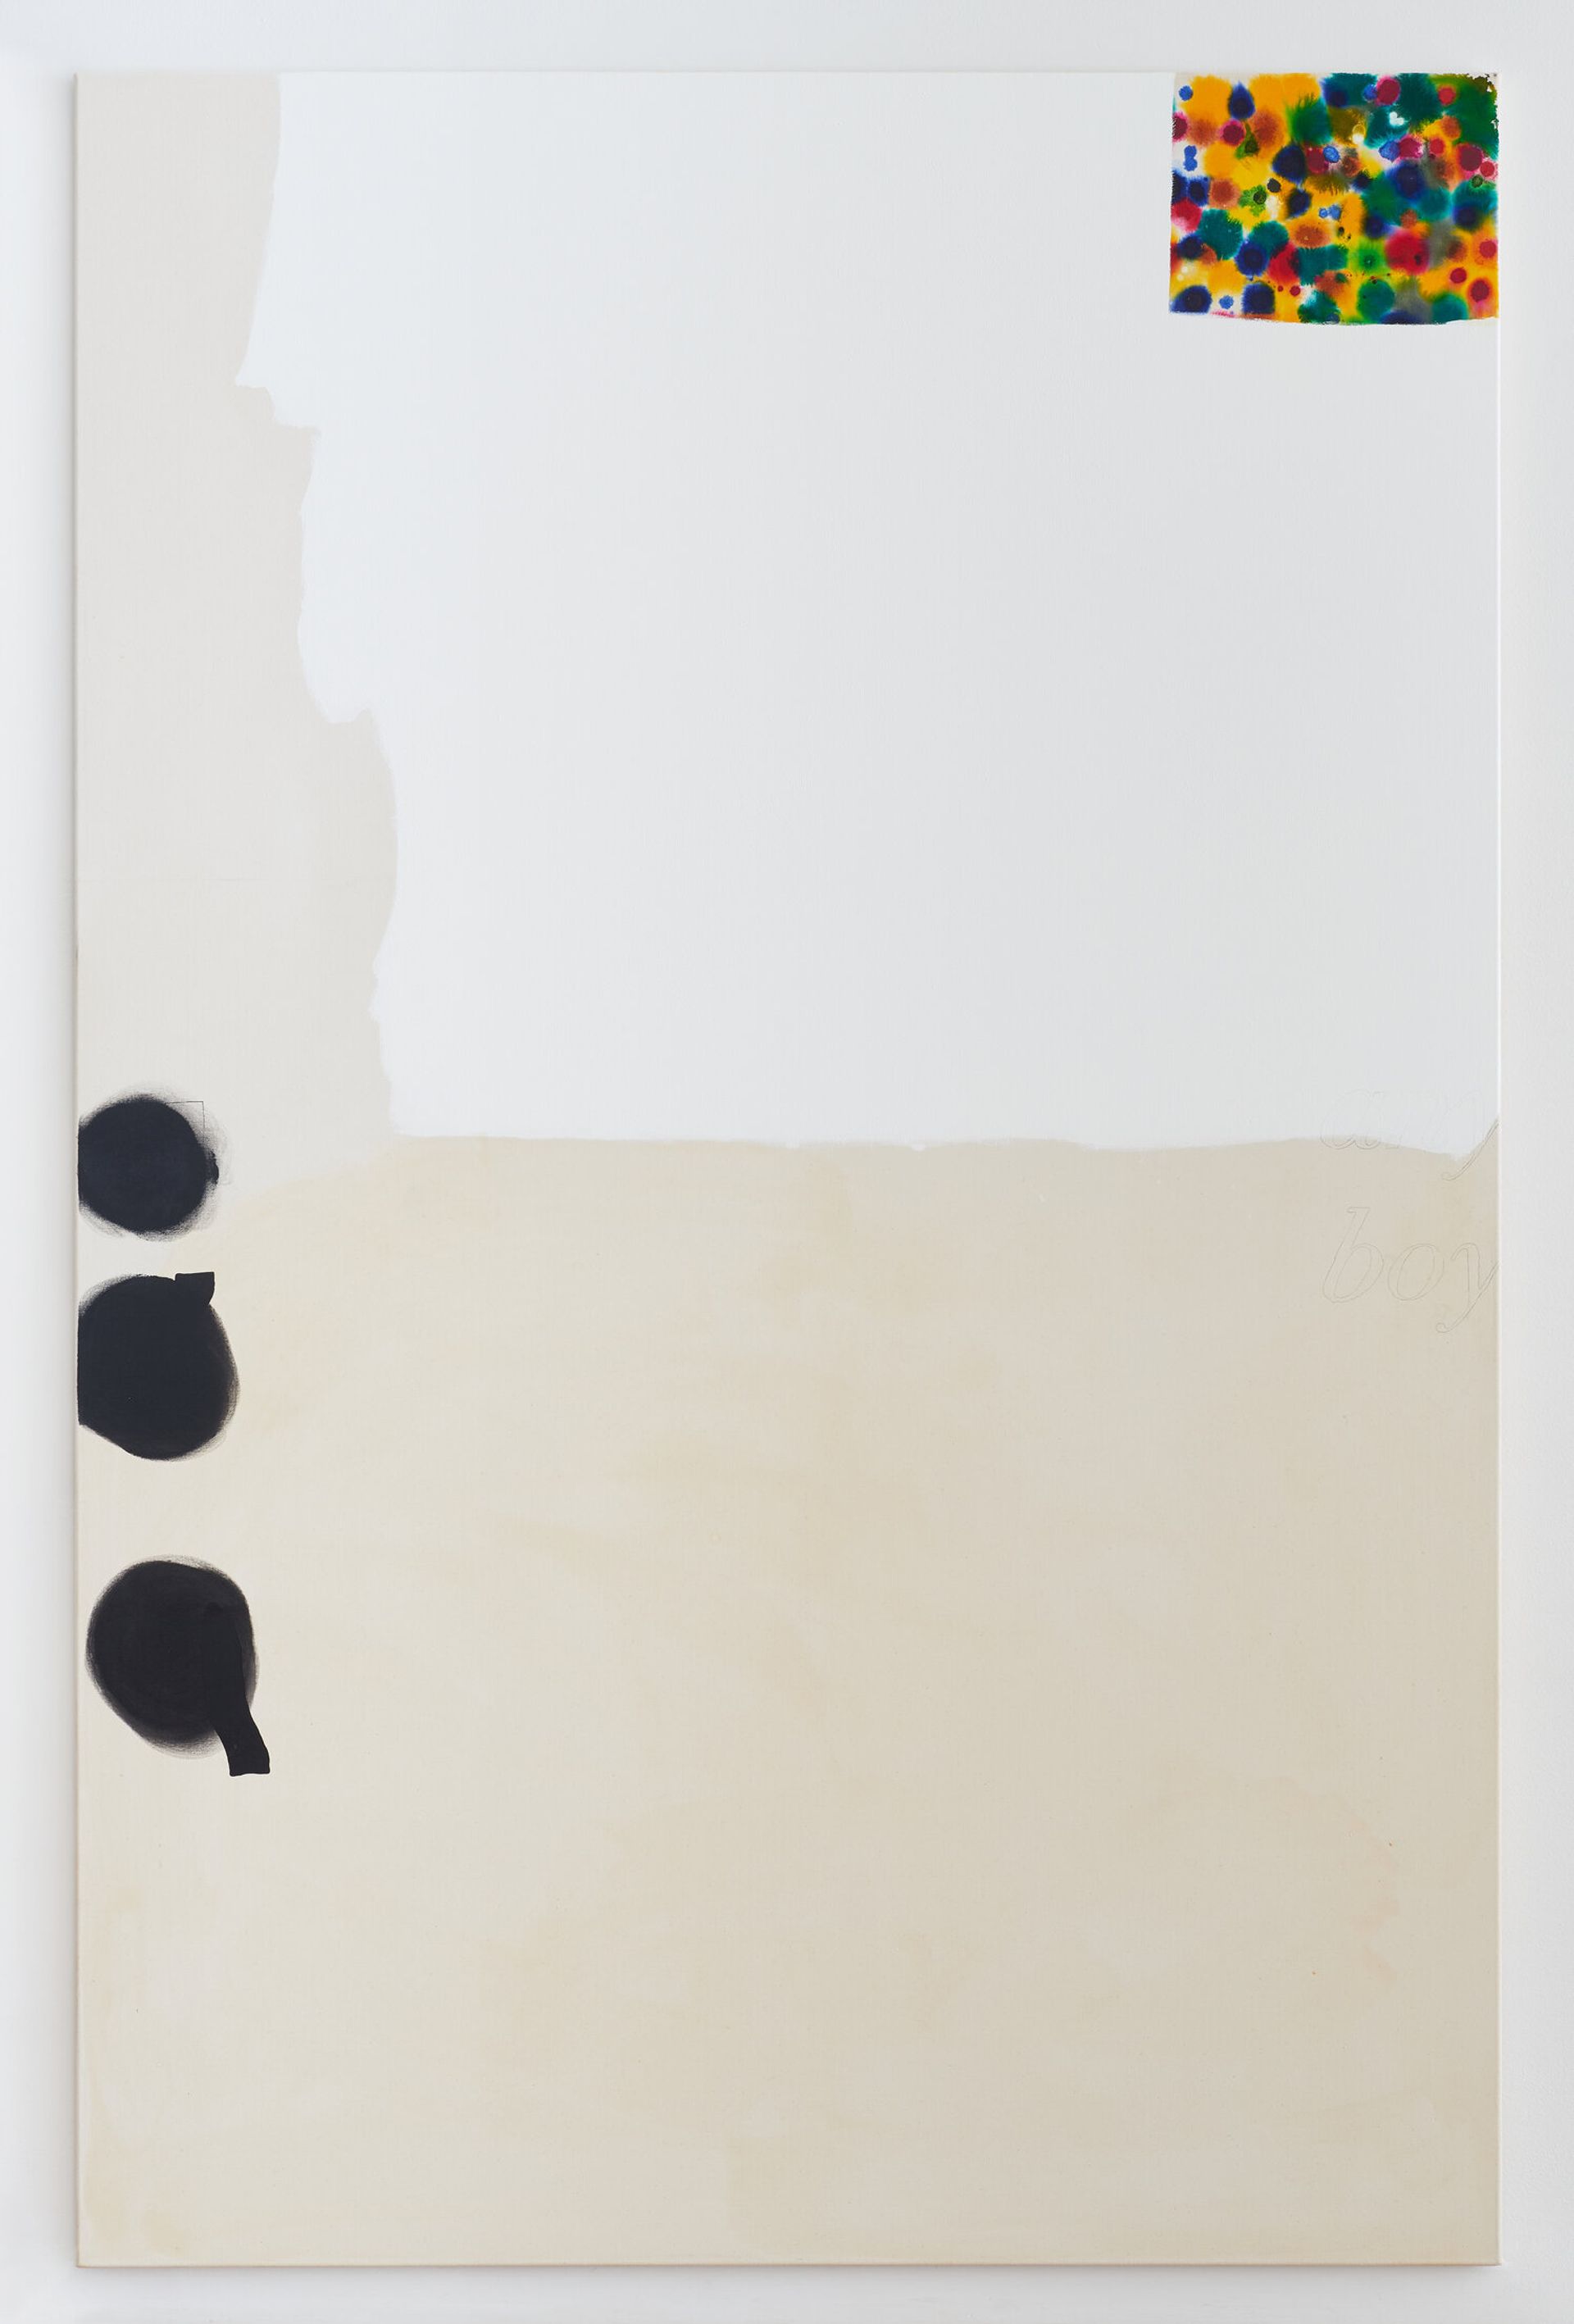 Malte Zenses, boy, 2018, lacquer, pencil and oil on canvas, wood, 130 × 220 cm